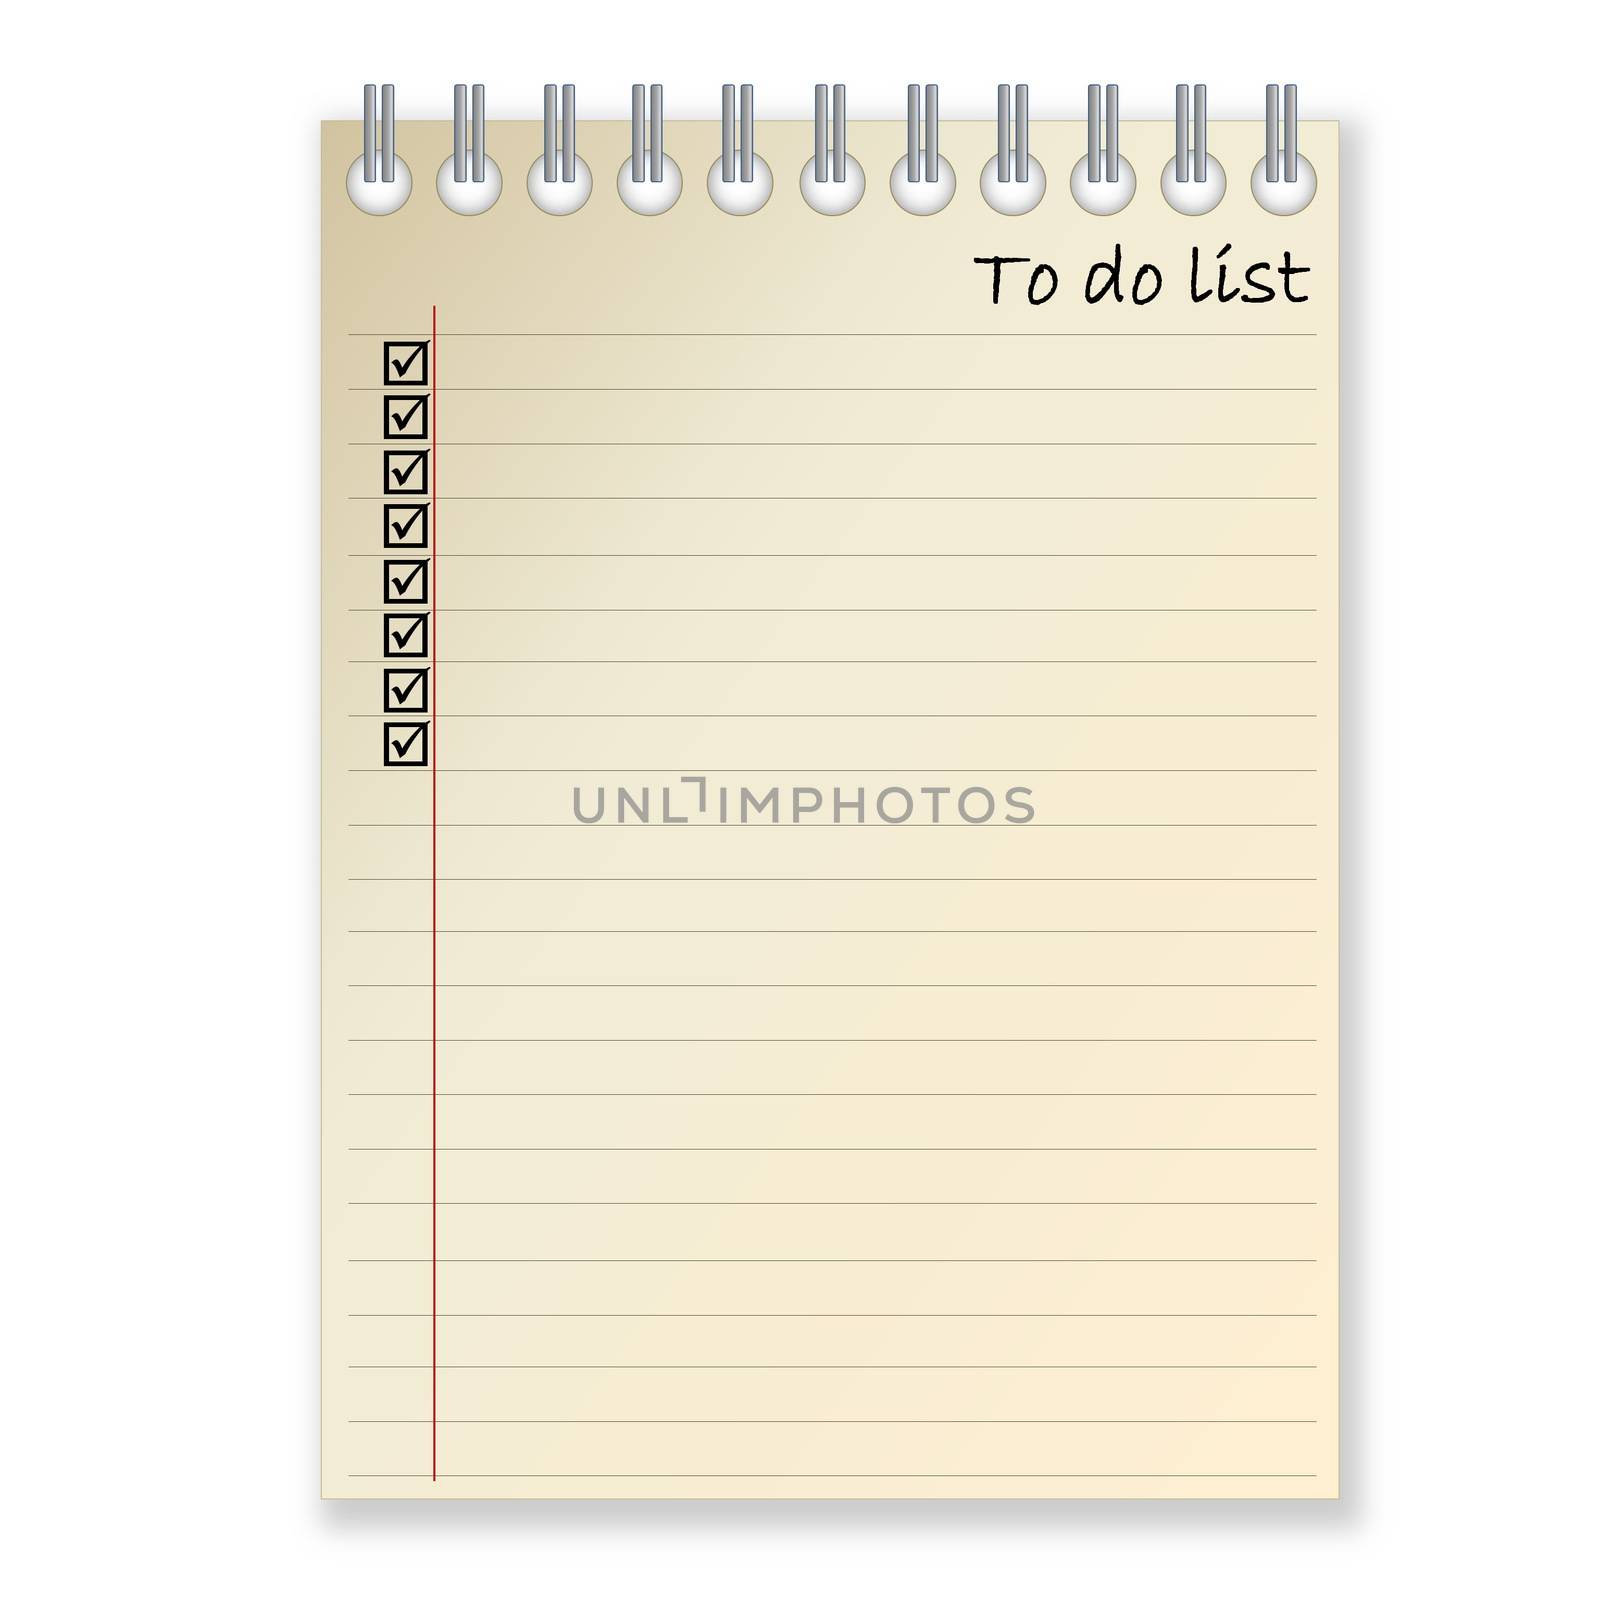 To-do list by Elenaphotos21